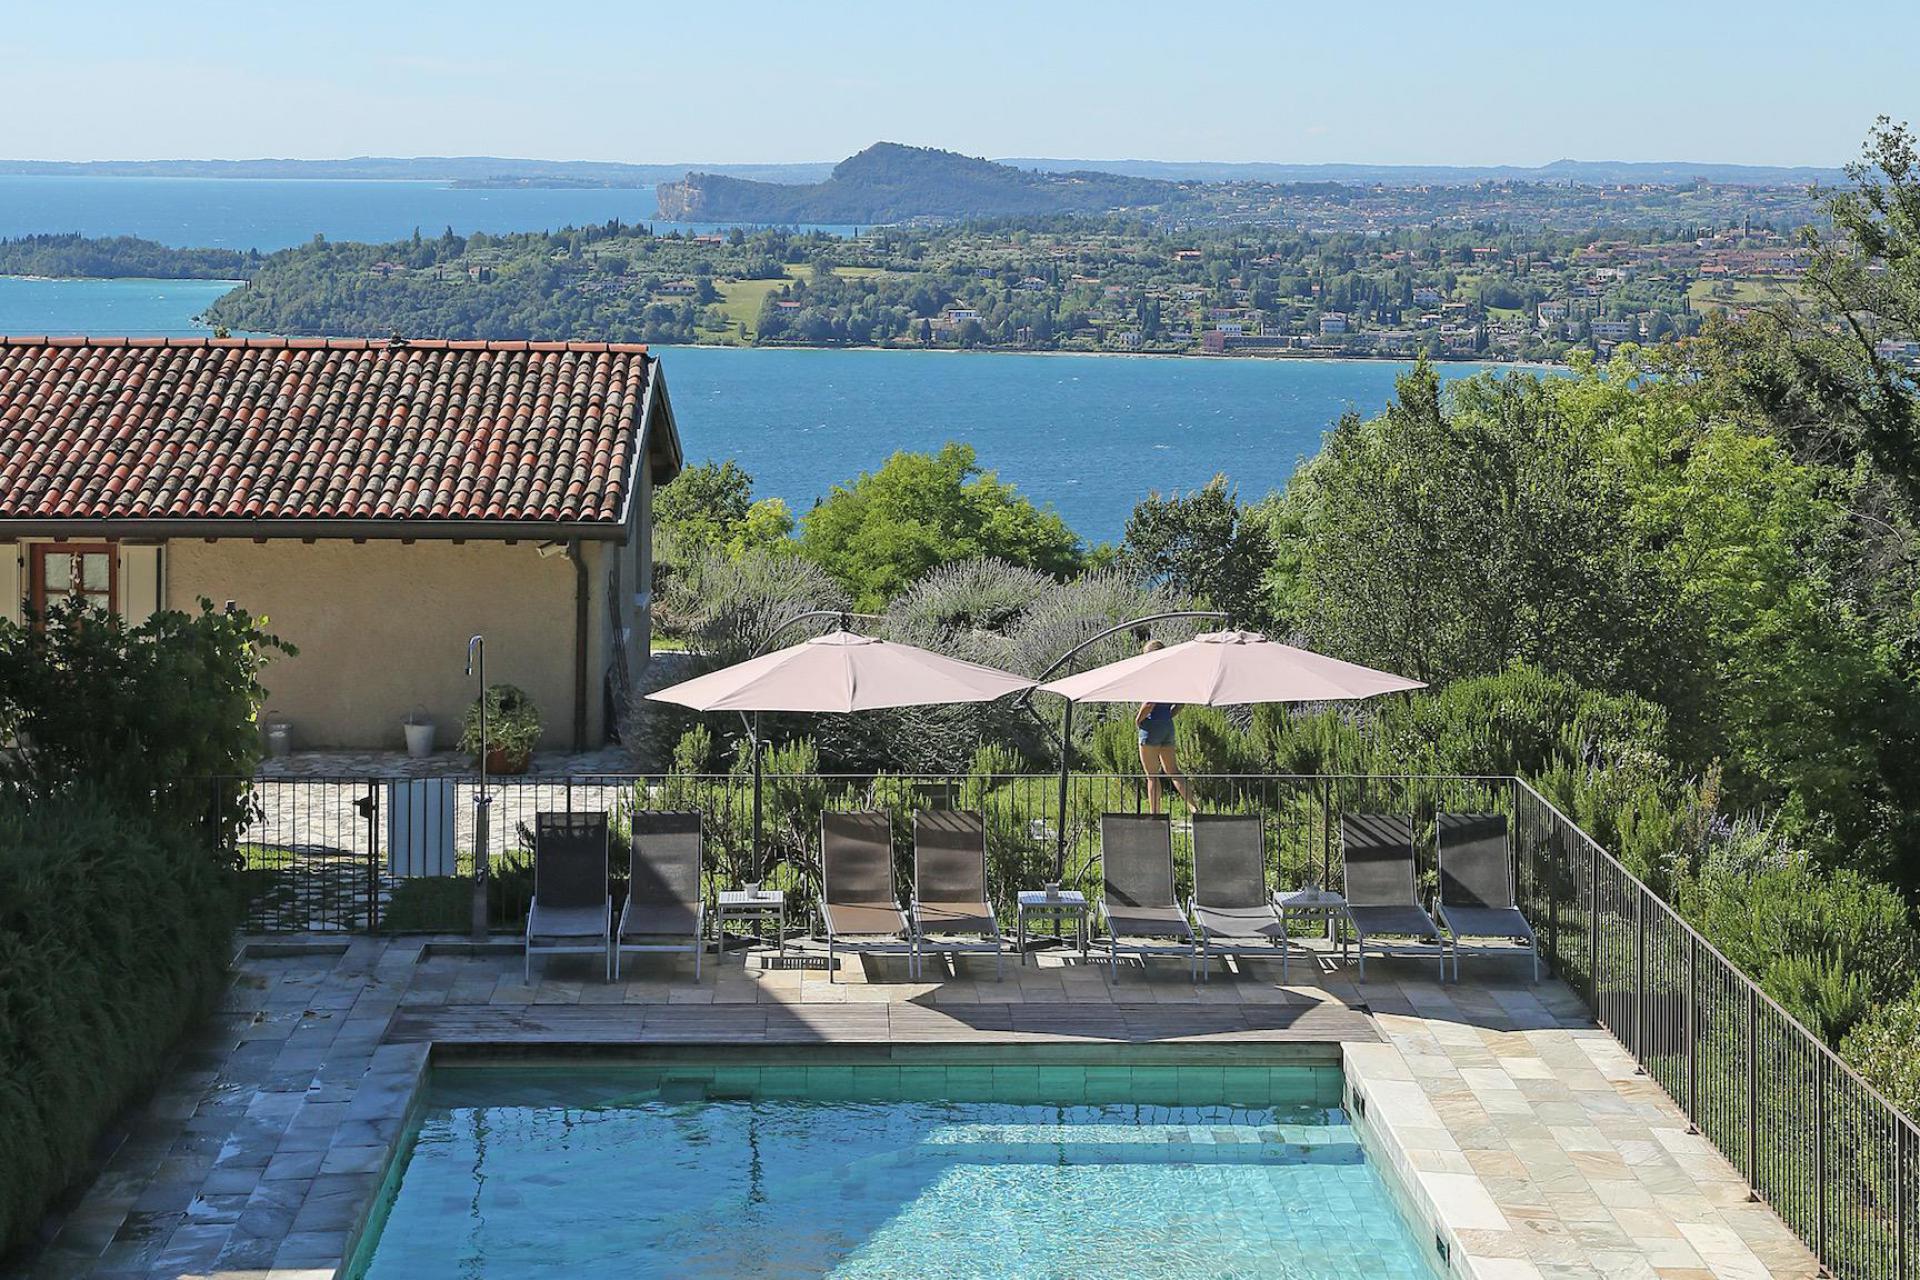 Agriturismo overlooking Lake Garda and stylish interior